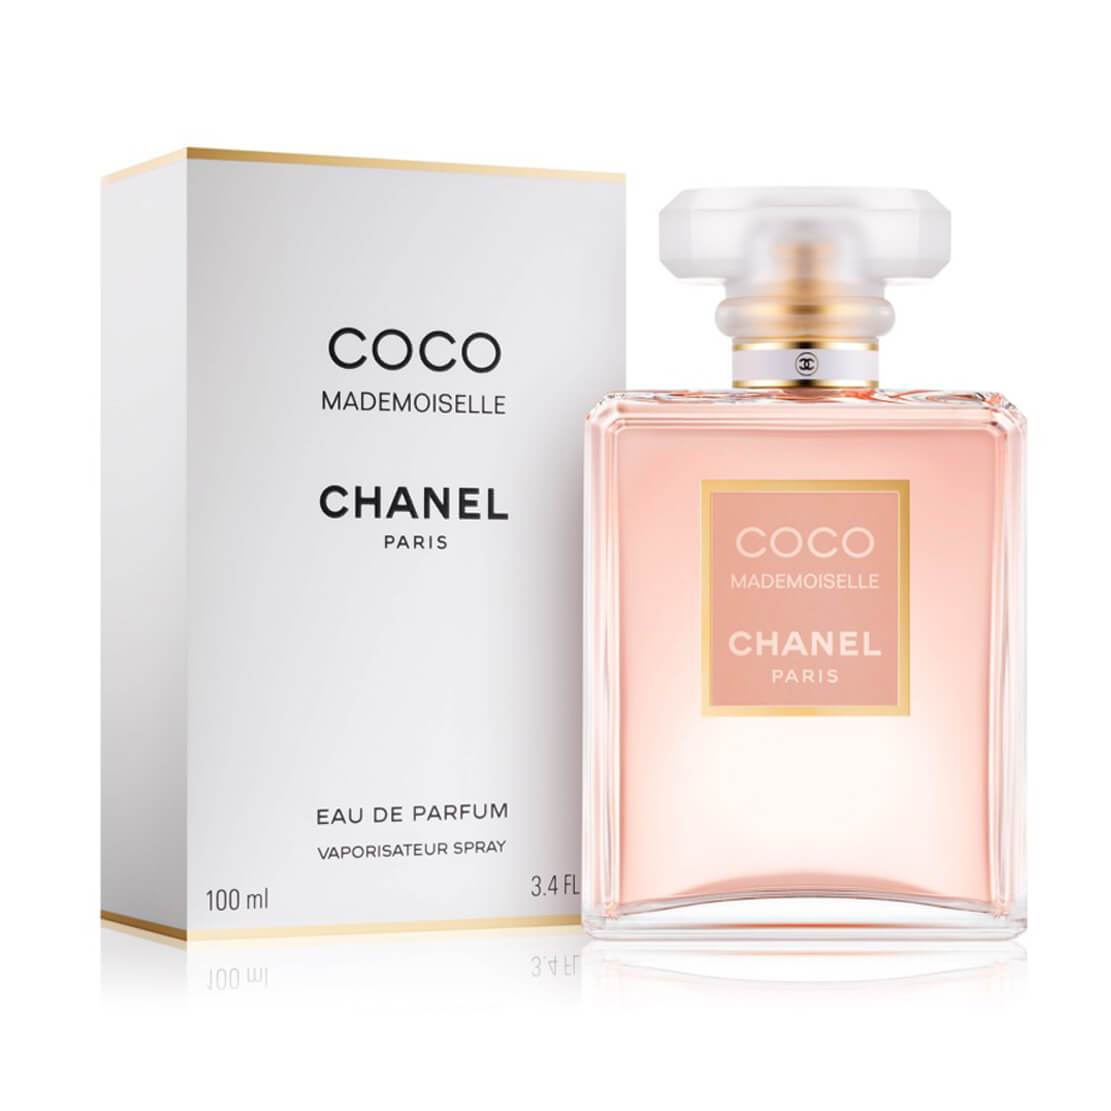 Top 73+ imagen coco chanel mademoiselle eau de parfum - Abzlocal.mx